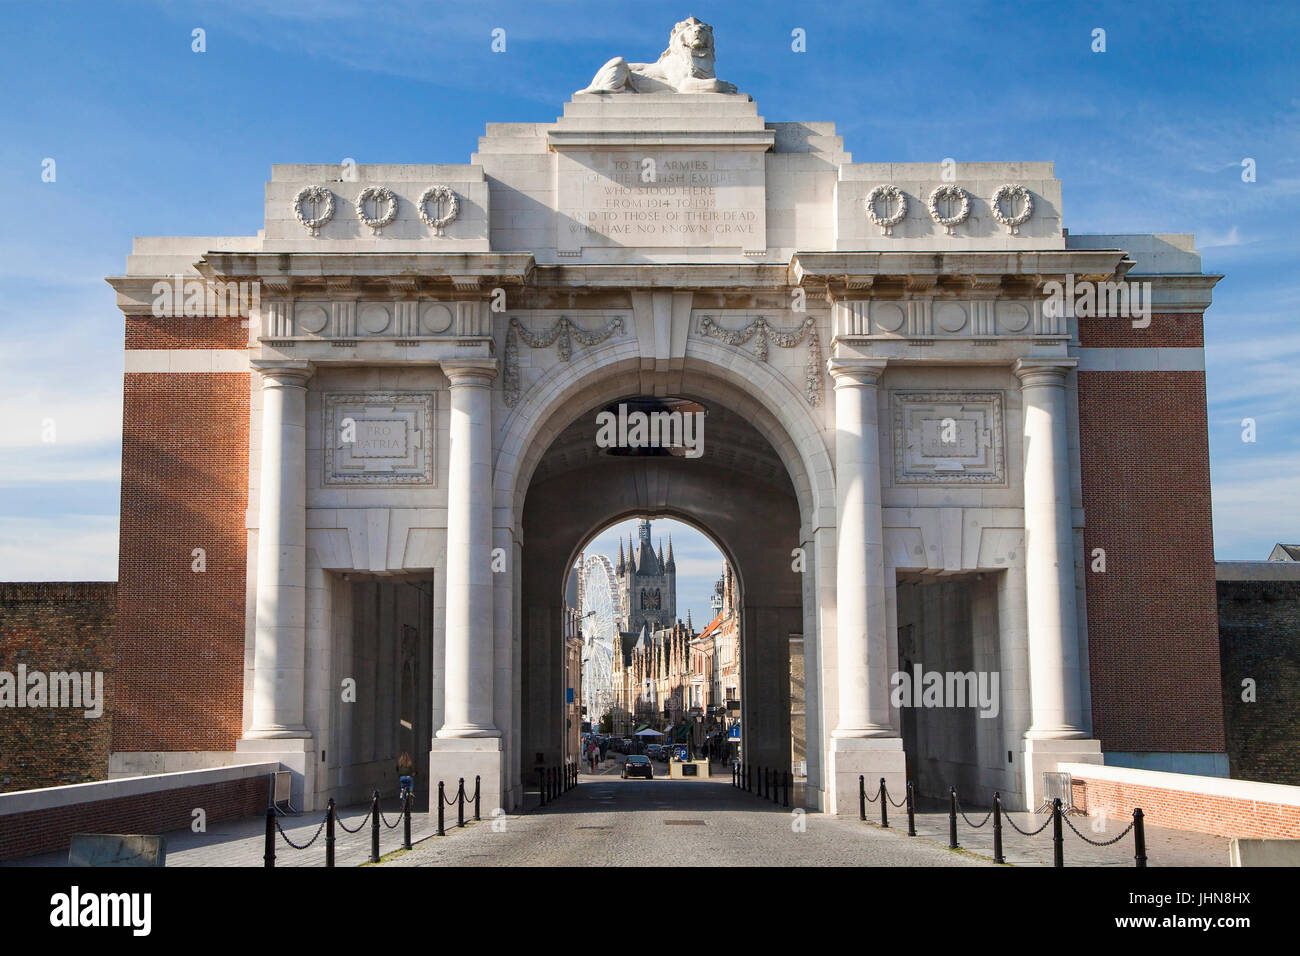 Menin Gate Memorial to the Missing in Ypres, West Flanders, Belgium. Stock Photo